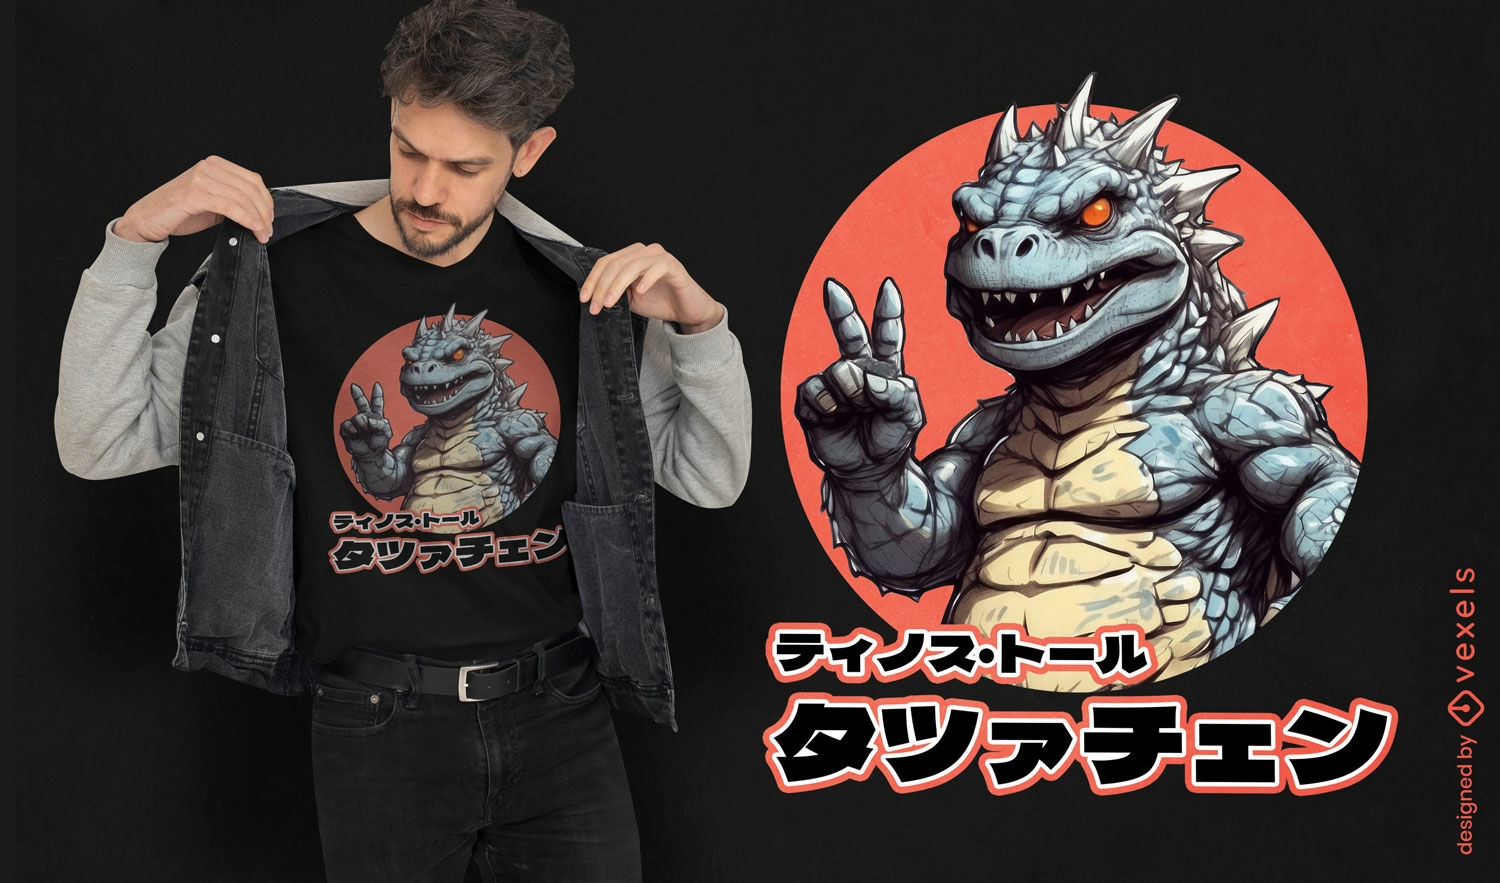 Dise?o de camiseta de dibujos animados japoneses de Godzilla.